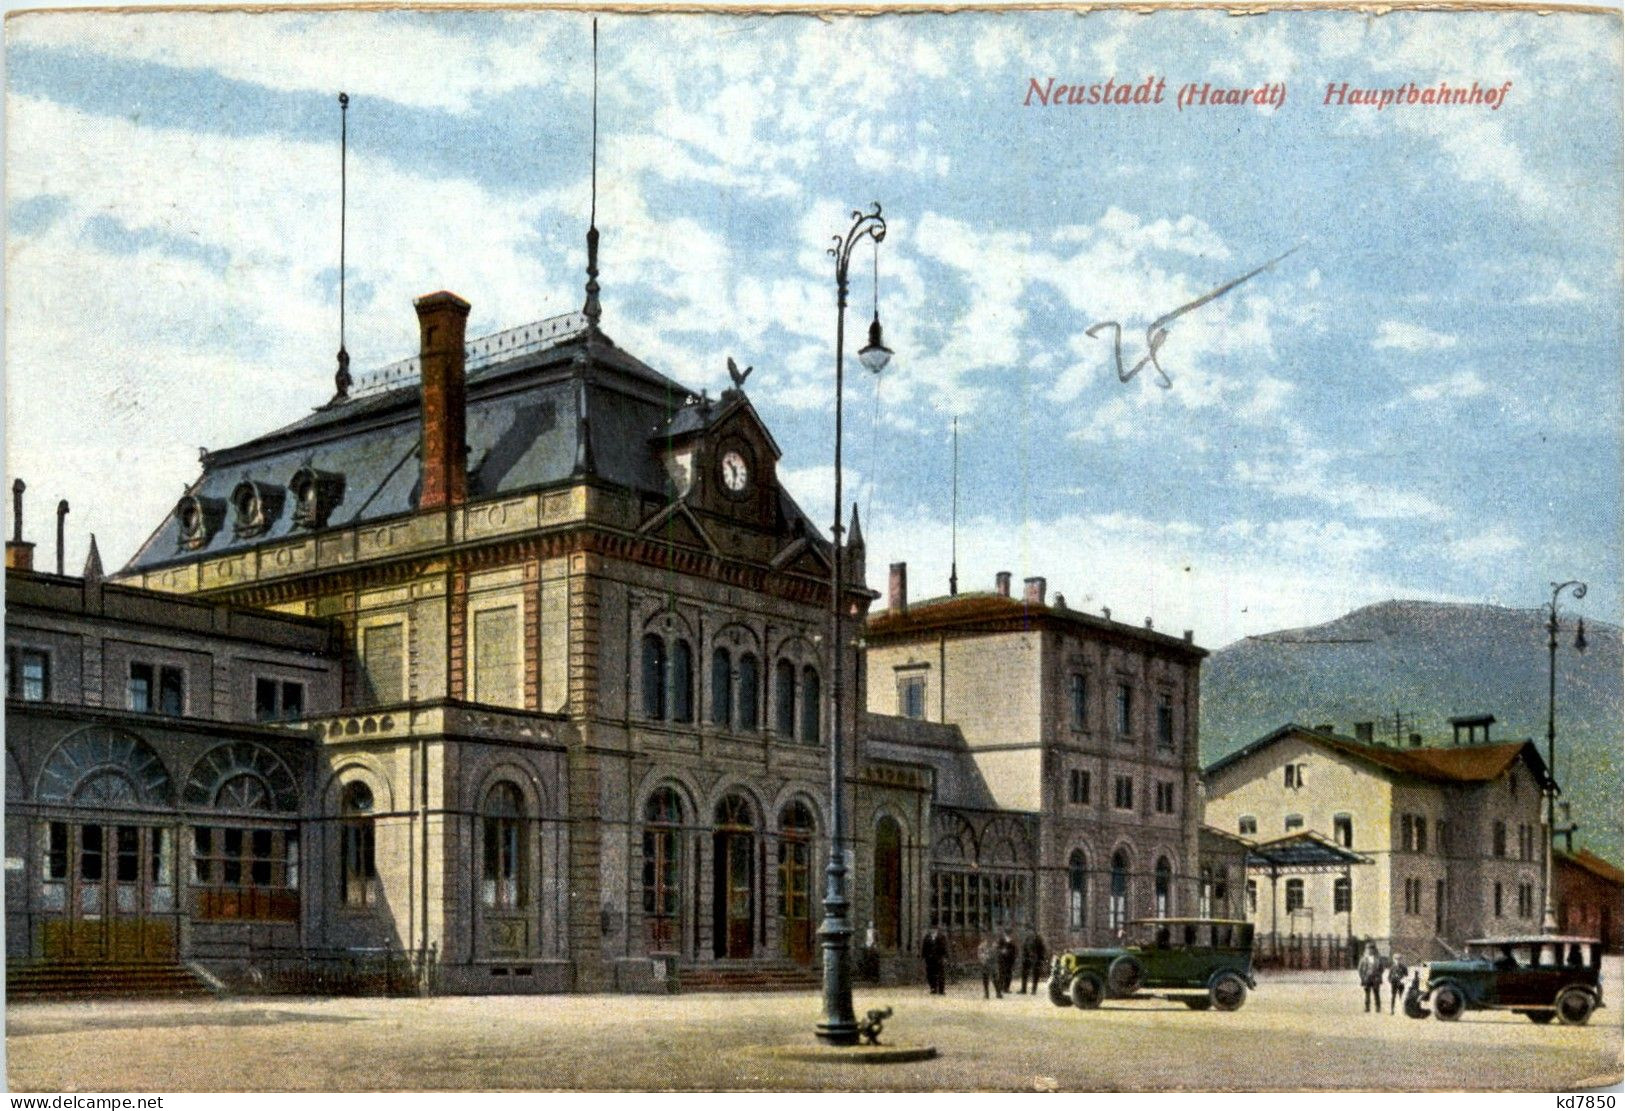 Neustadt - Hauptbahnhof - Neustadt (Weinstr.)